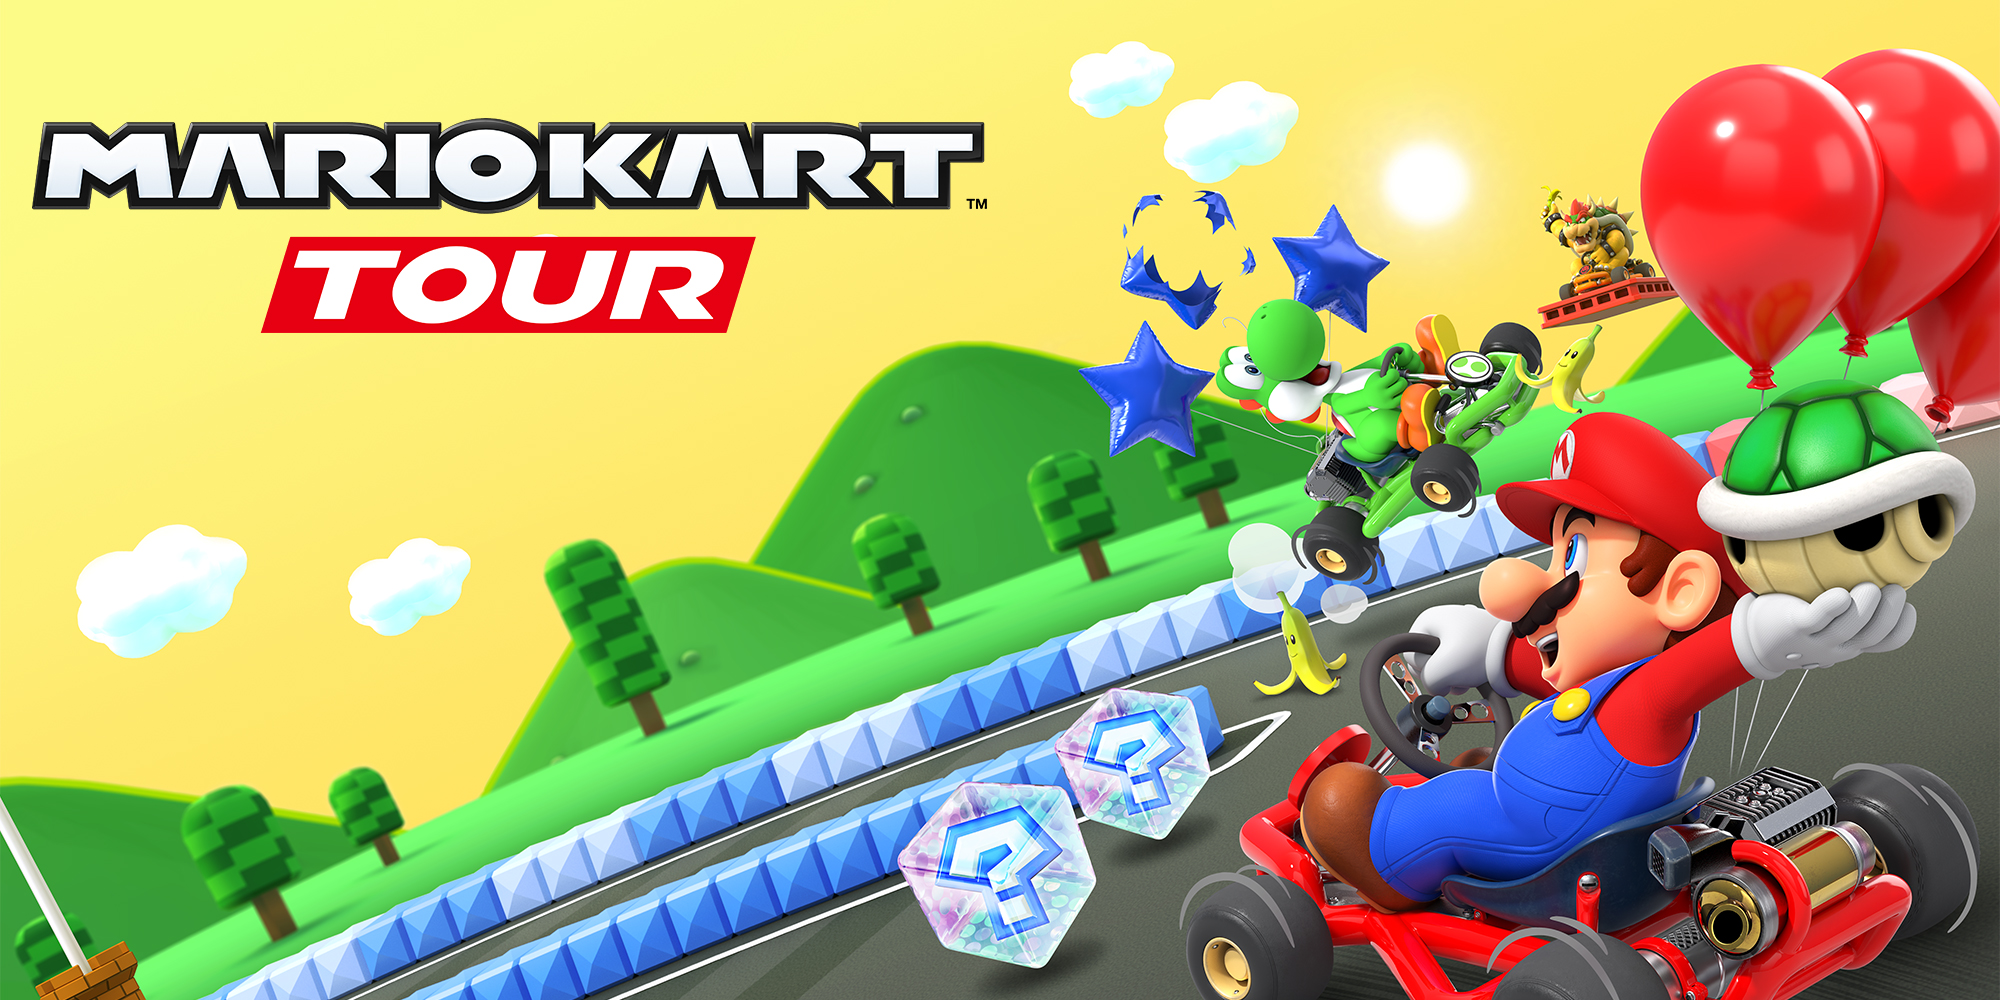 Get ready for Mario Kart Tour on September 25th!